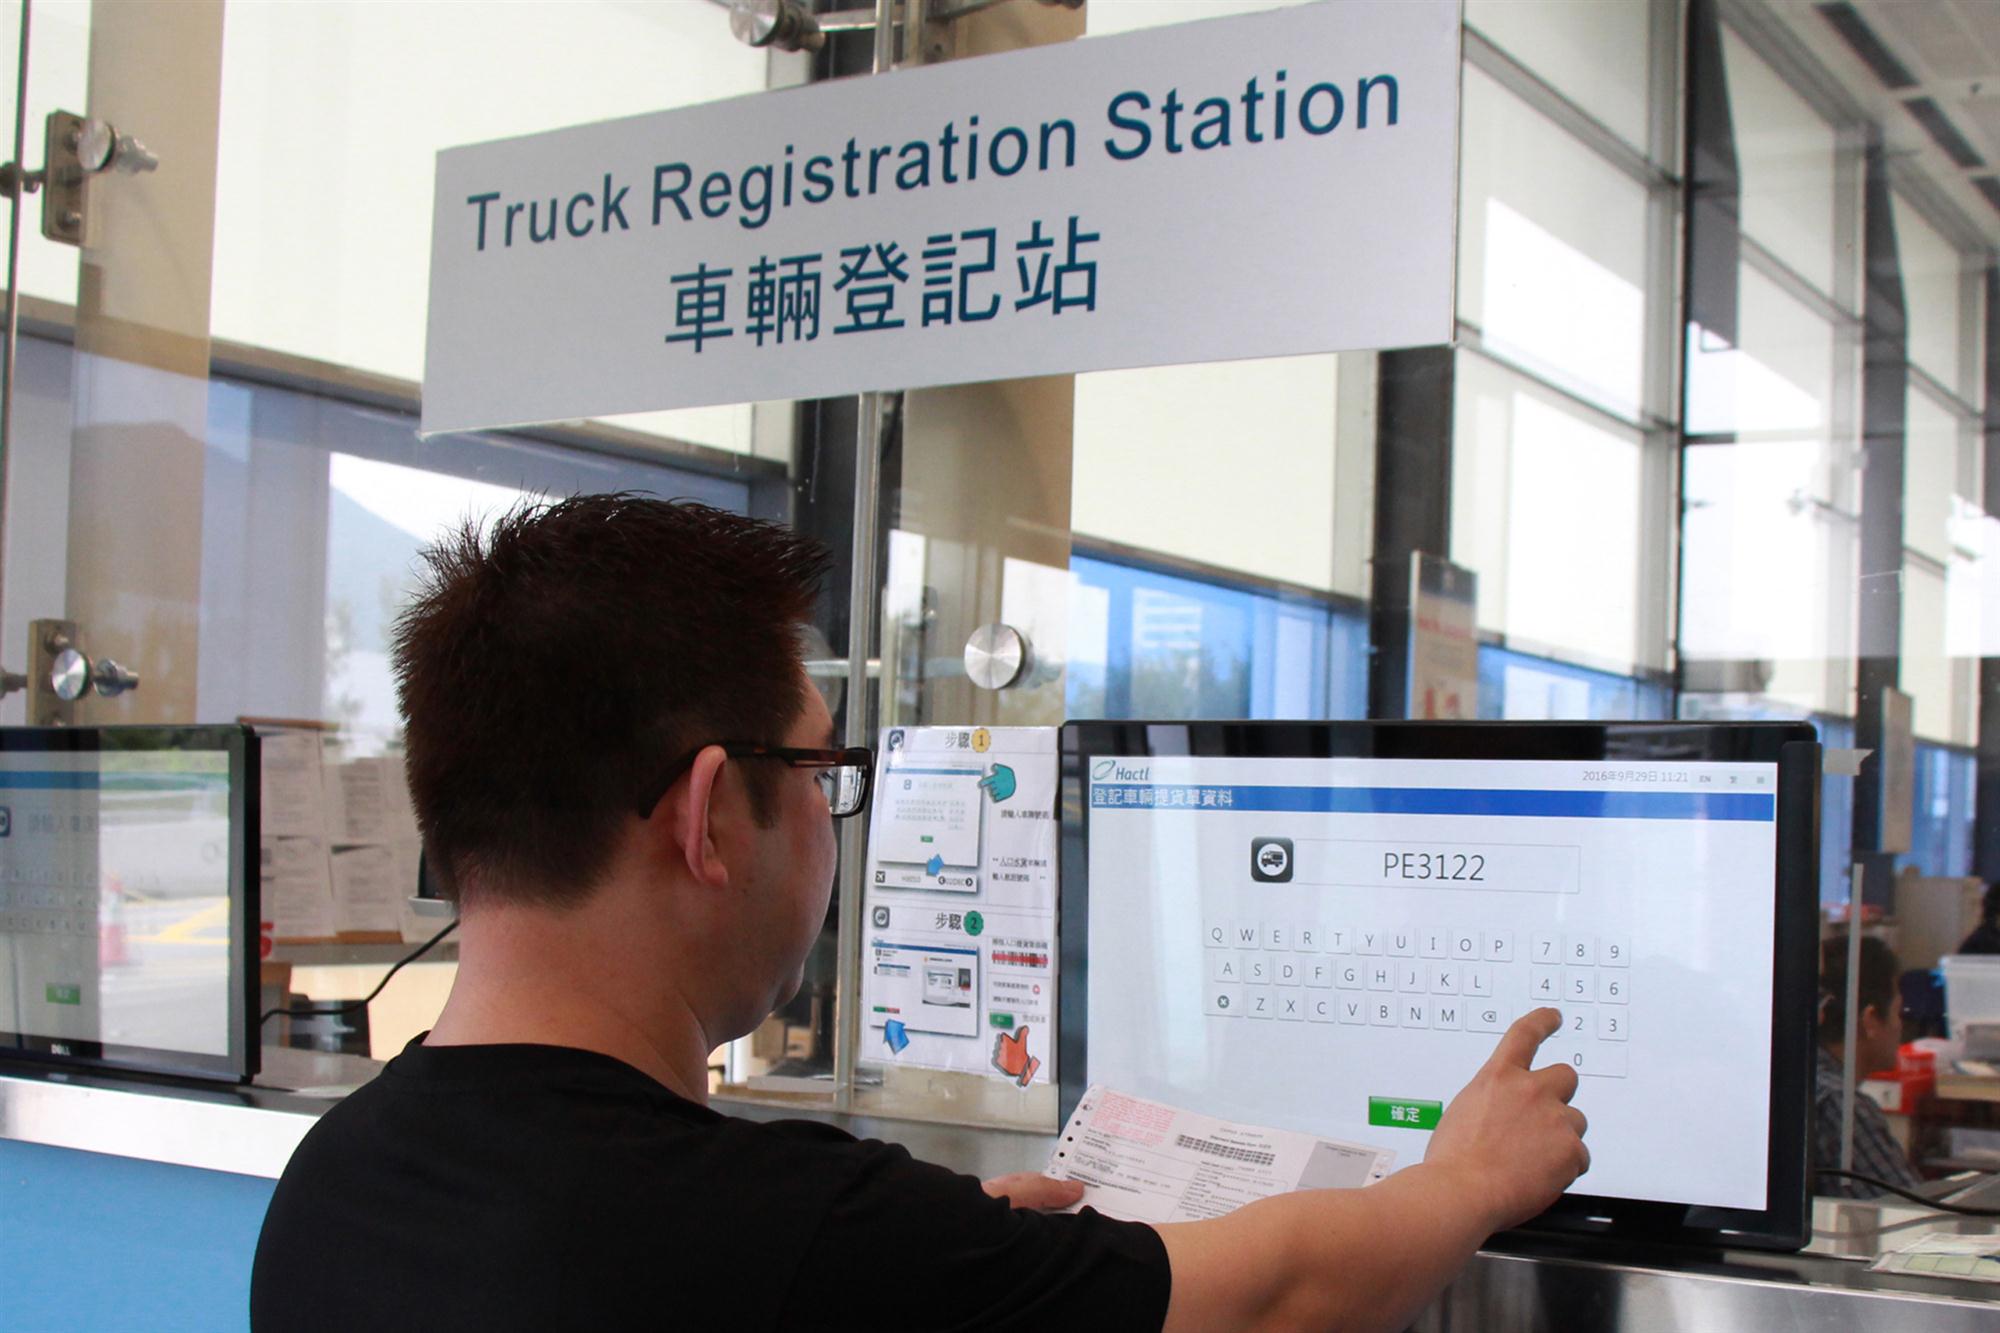 Self Photos / Files - Truck Registration Station